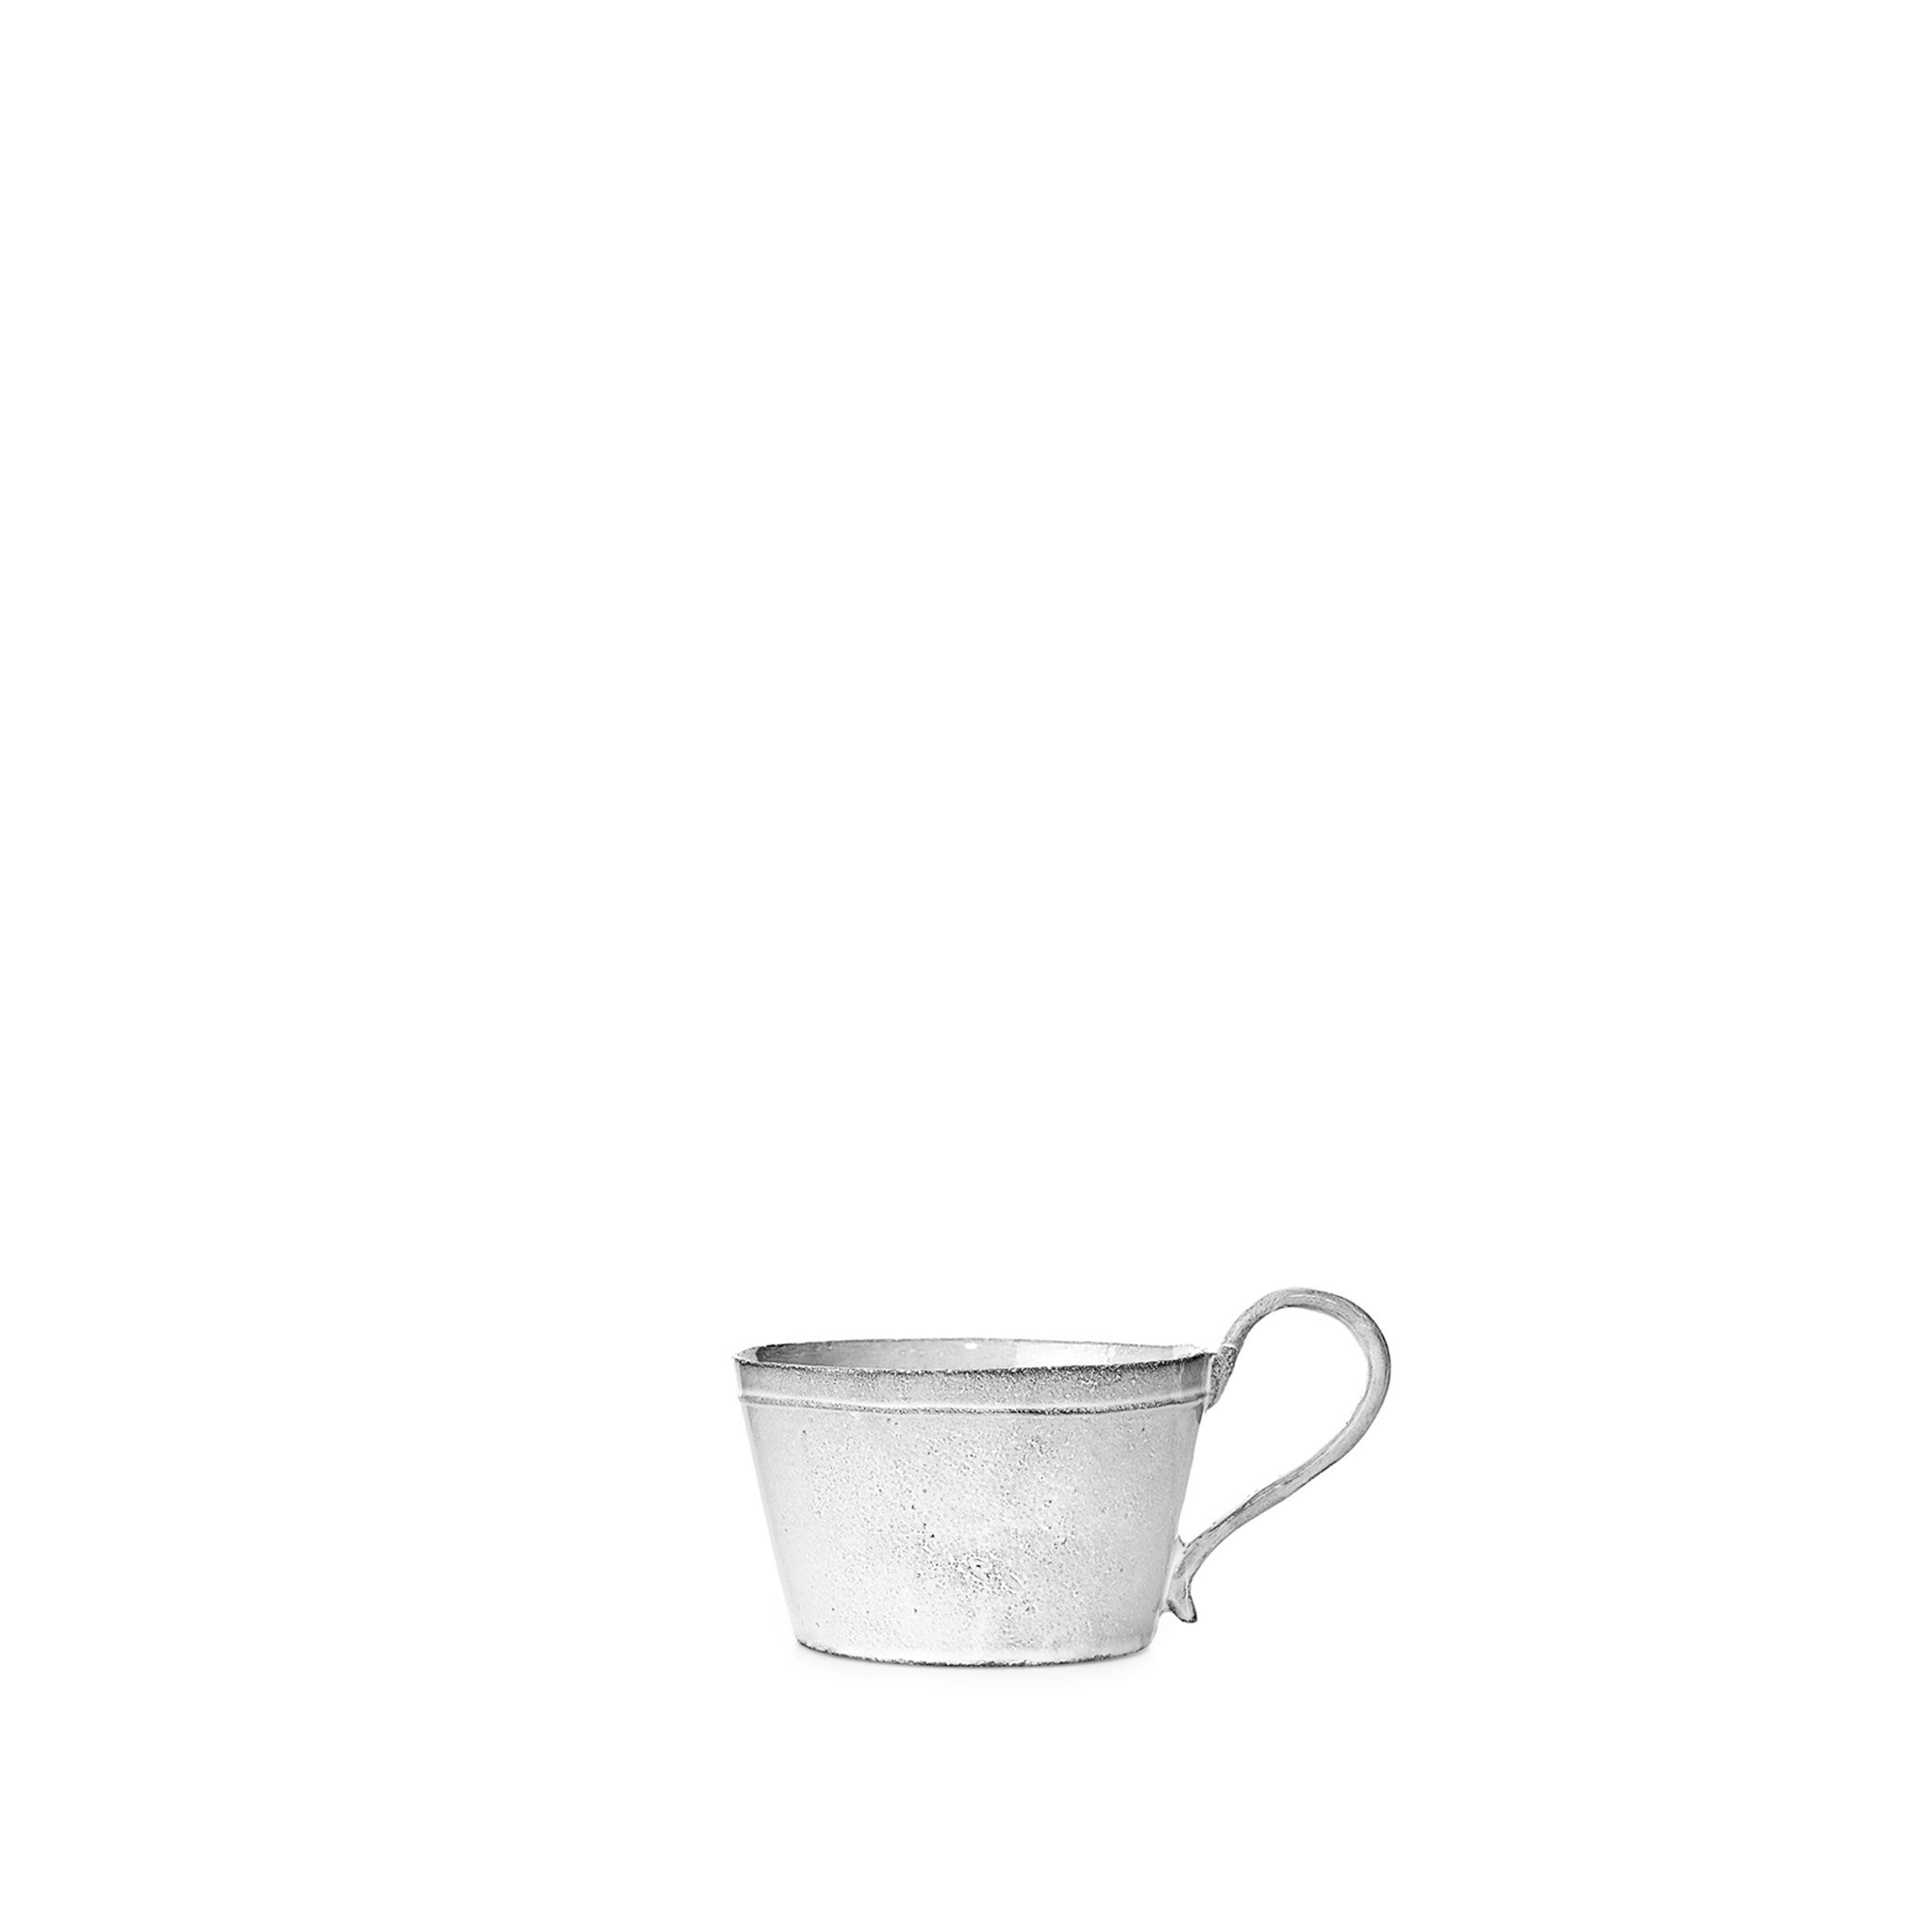 Simple Hot Chocolate Cup by Astier de Villatte, 11cm